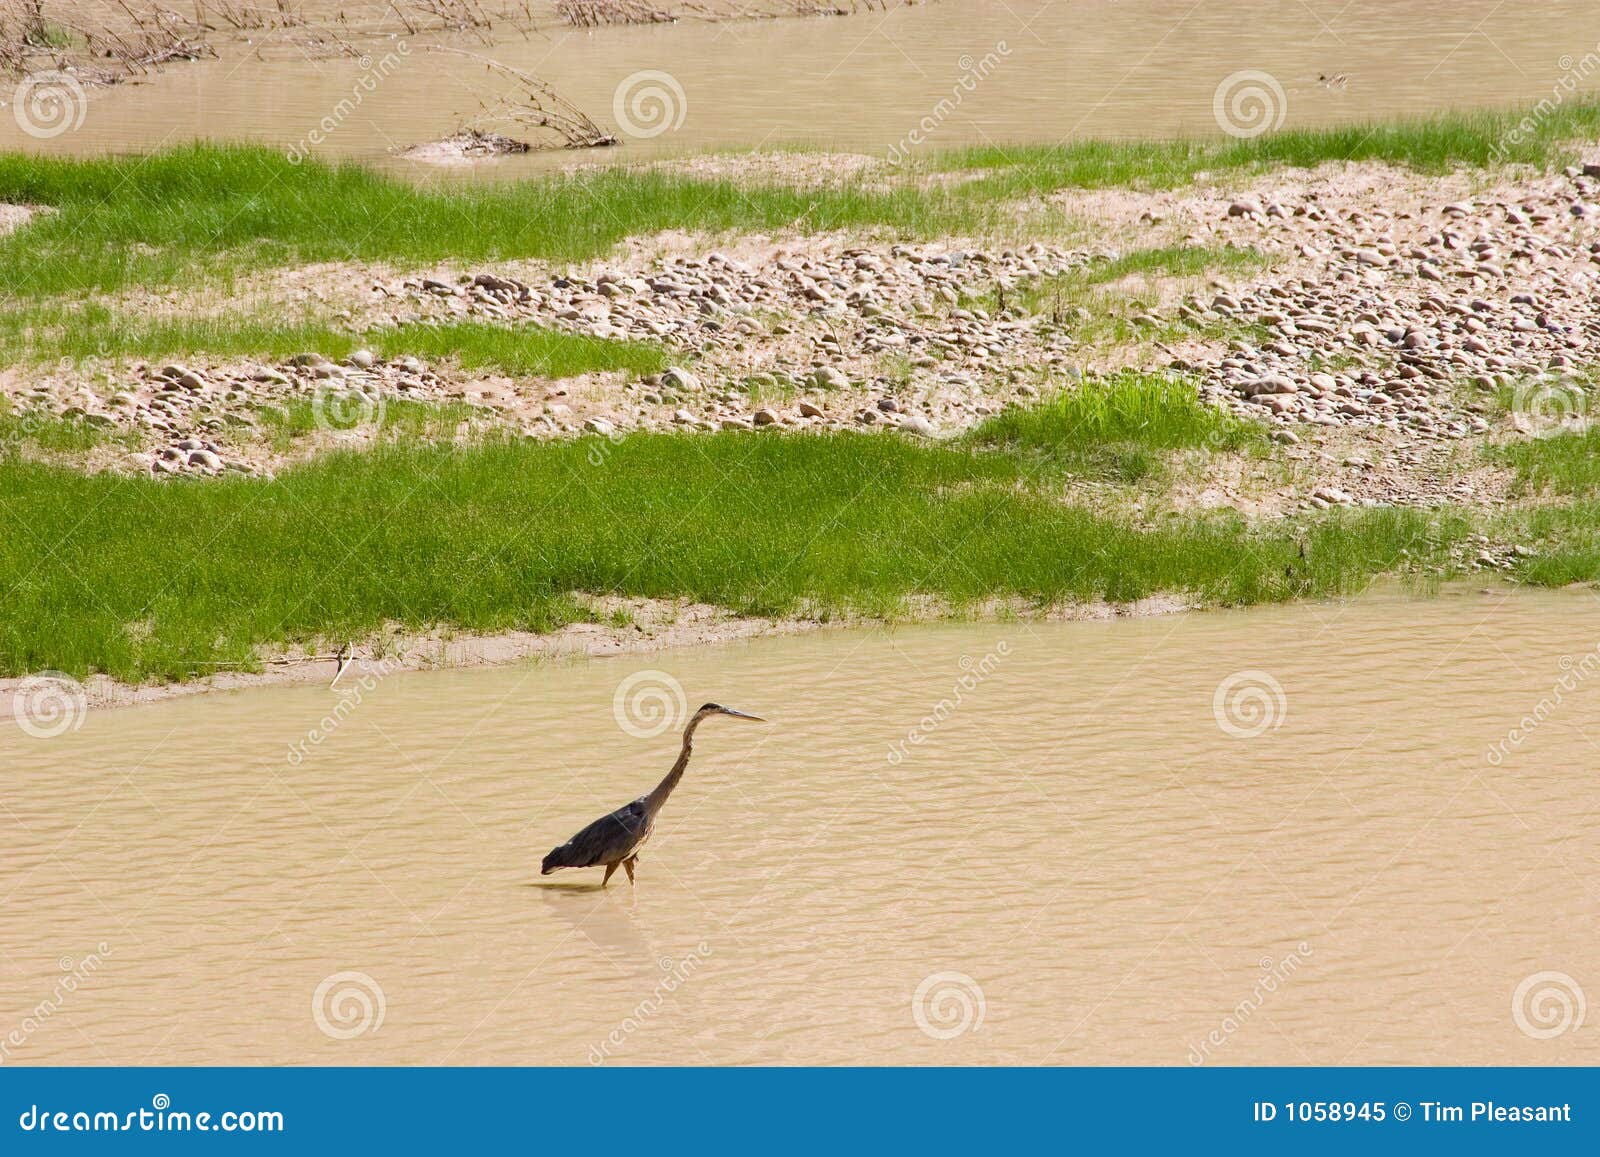 wading bird on the colorado river